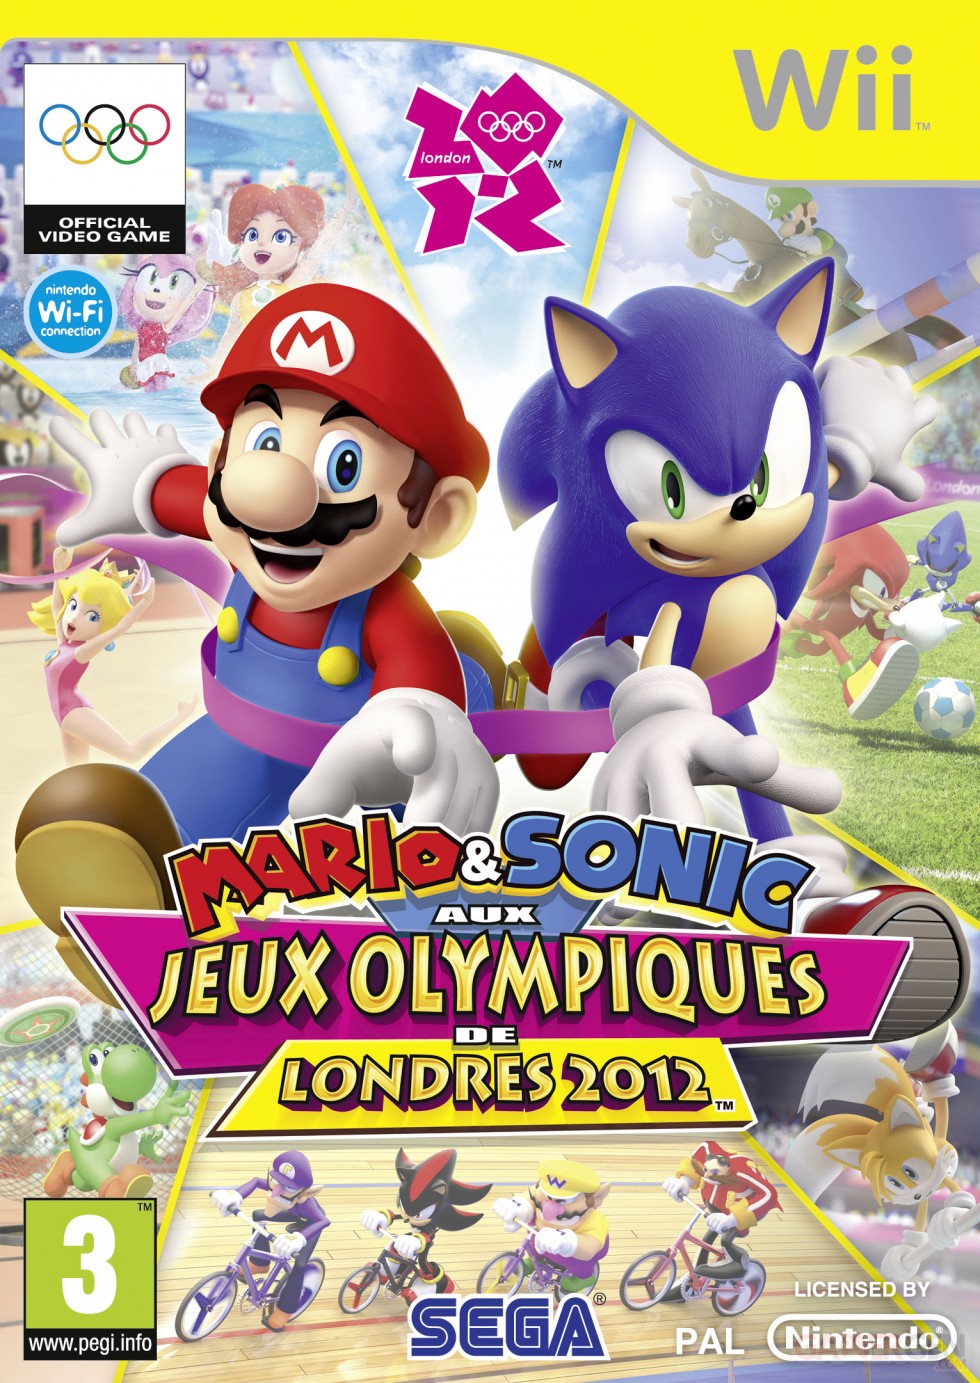 screenshot-capture-image-mario-sonic-jeux-olympiques-londres-2012-jaquette-boxart-cover